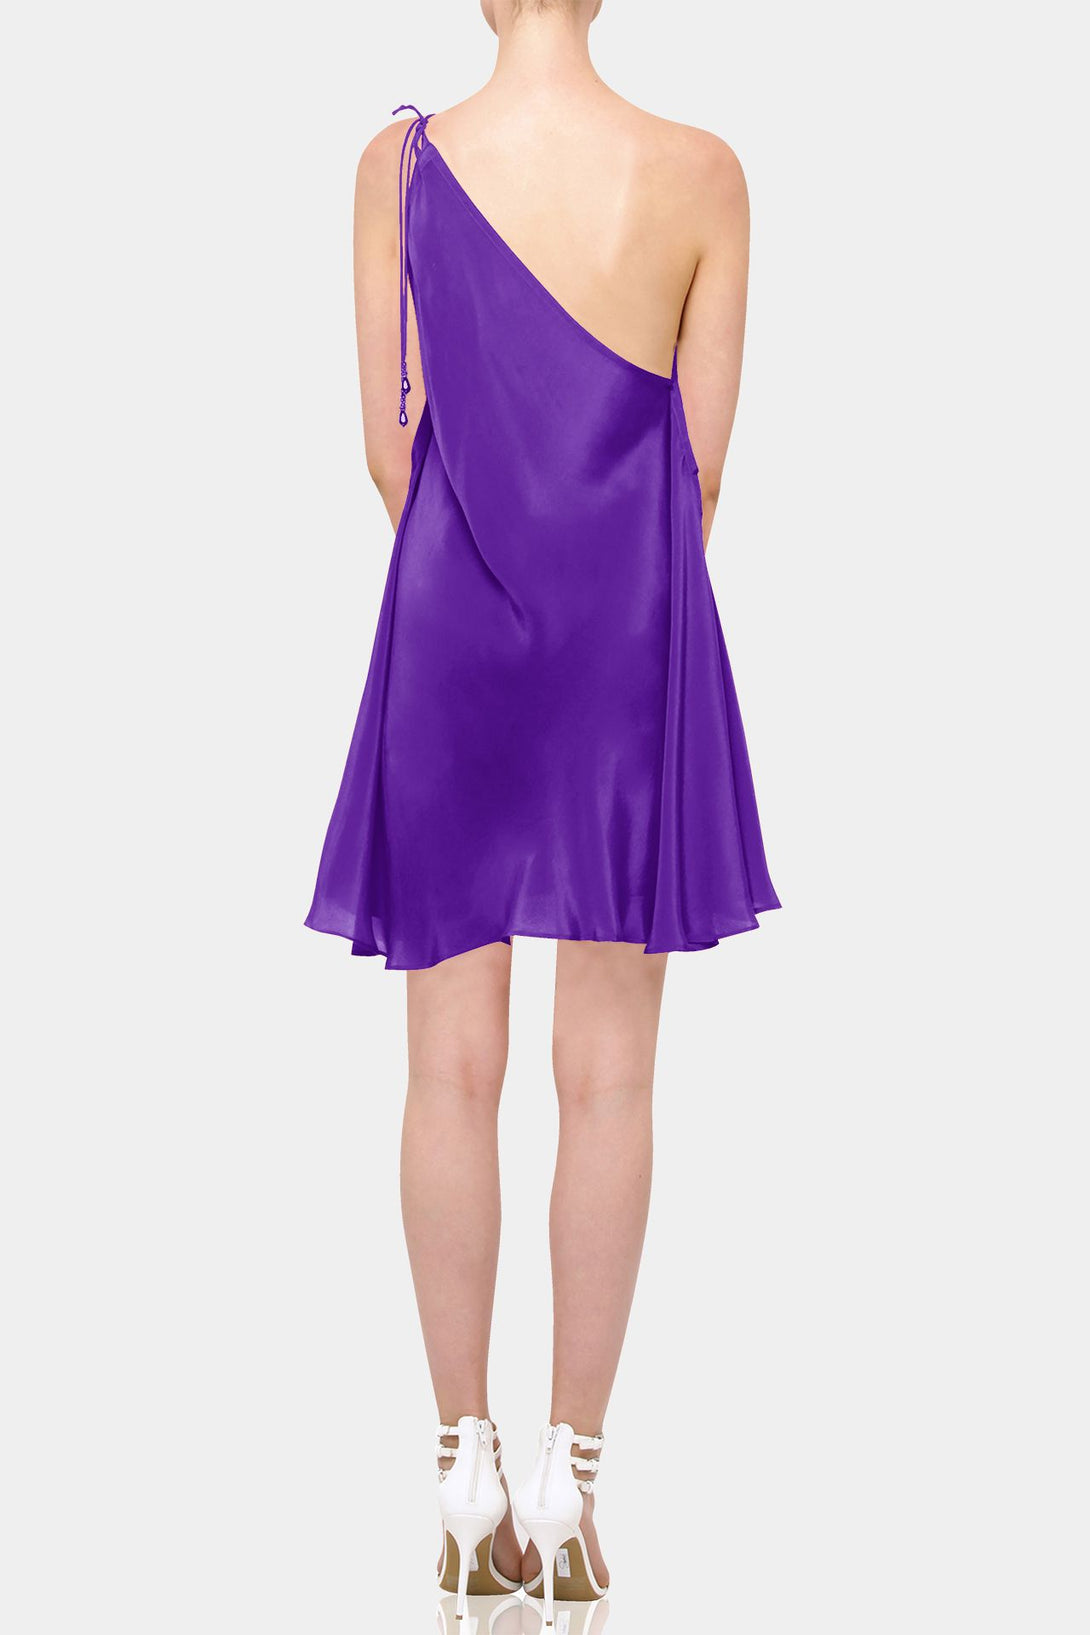  dark purple short dress, Shahida Parides, sexy mini dresses for women, sleeveless mini dress,